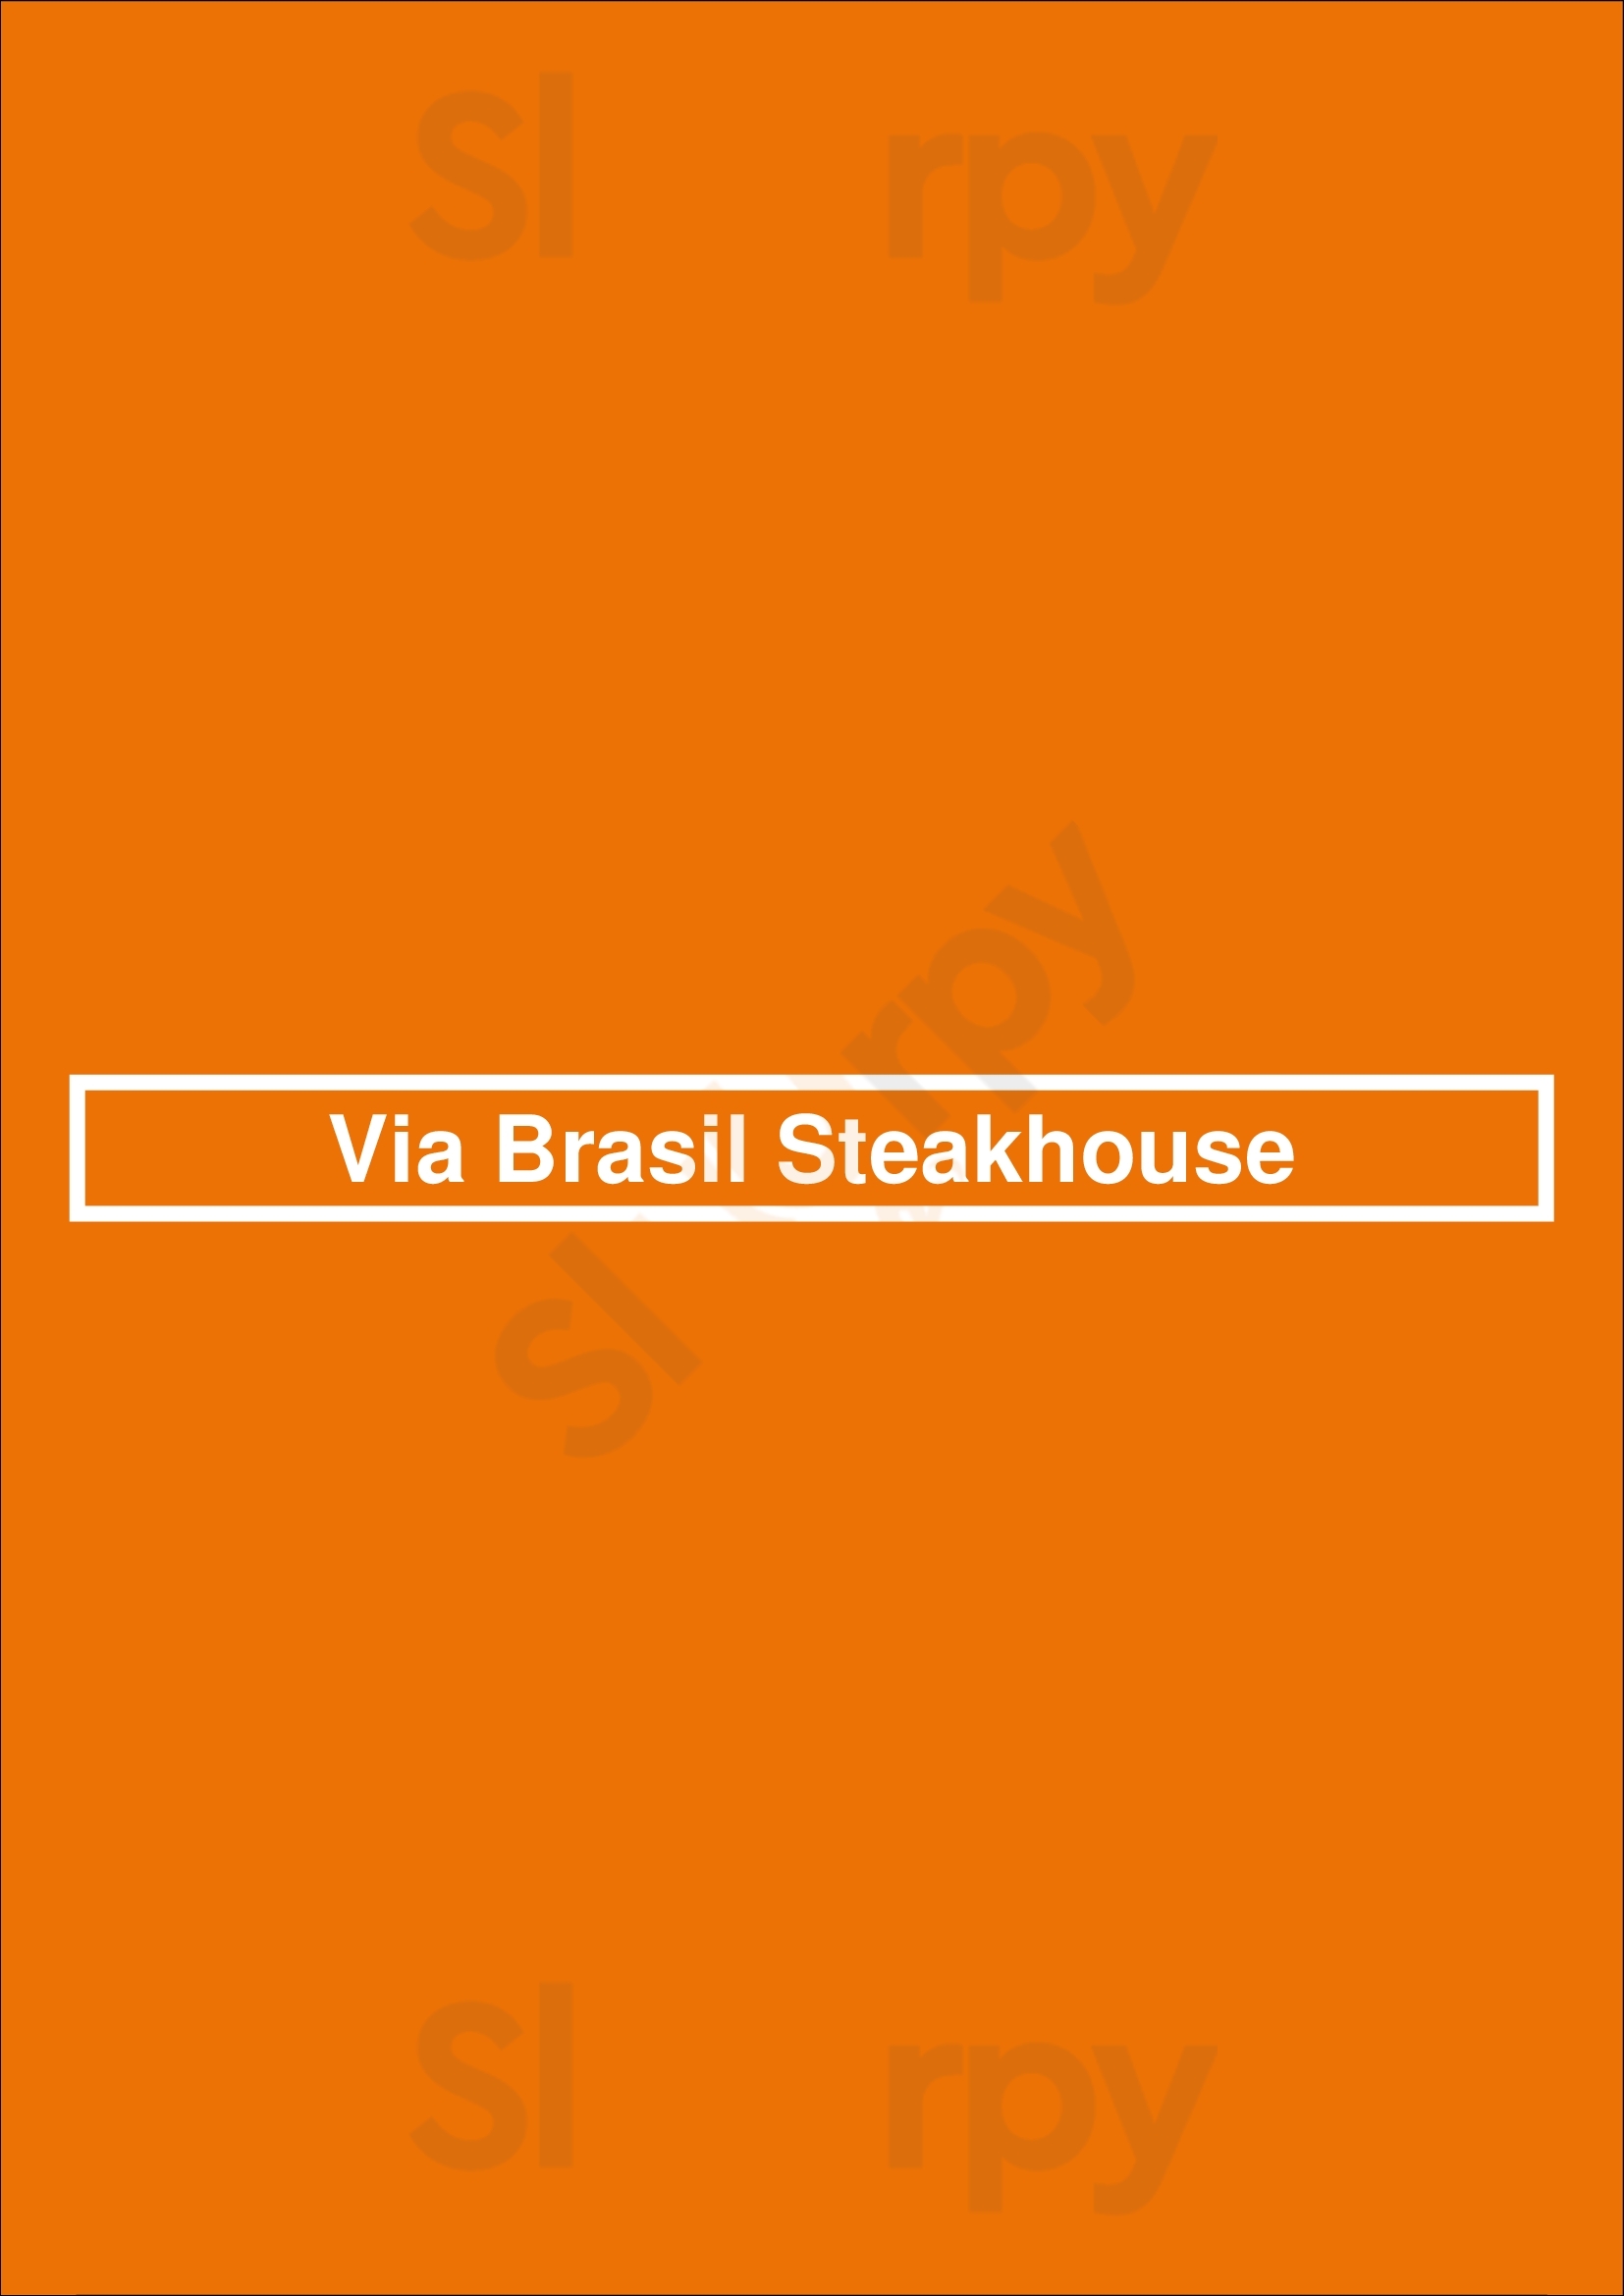 Via Brasil Steakhouse Las Vegas Menu - 1